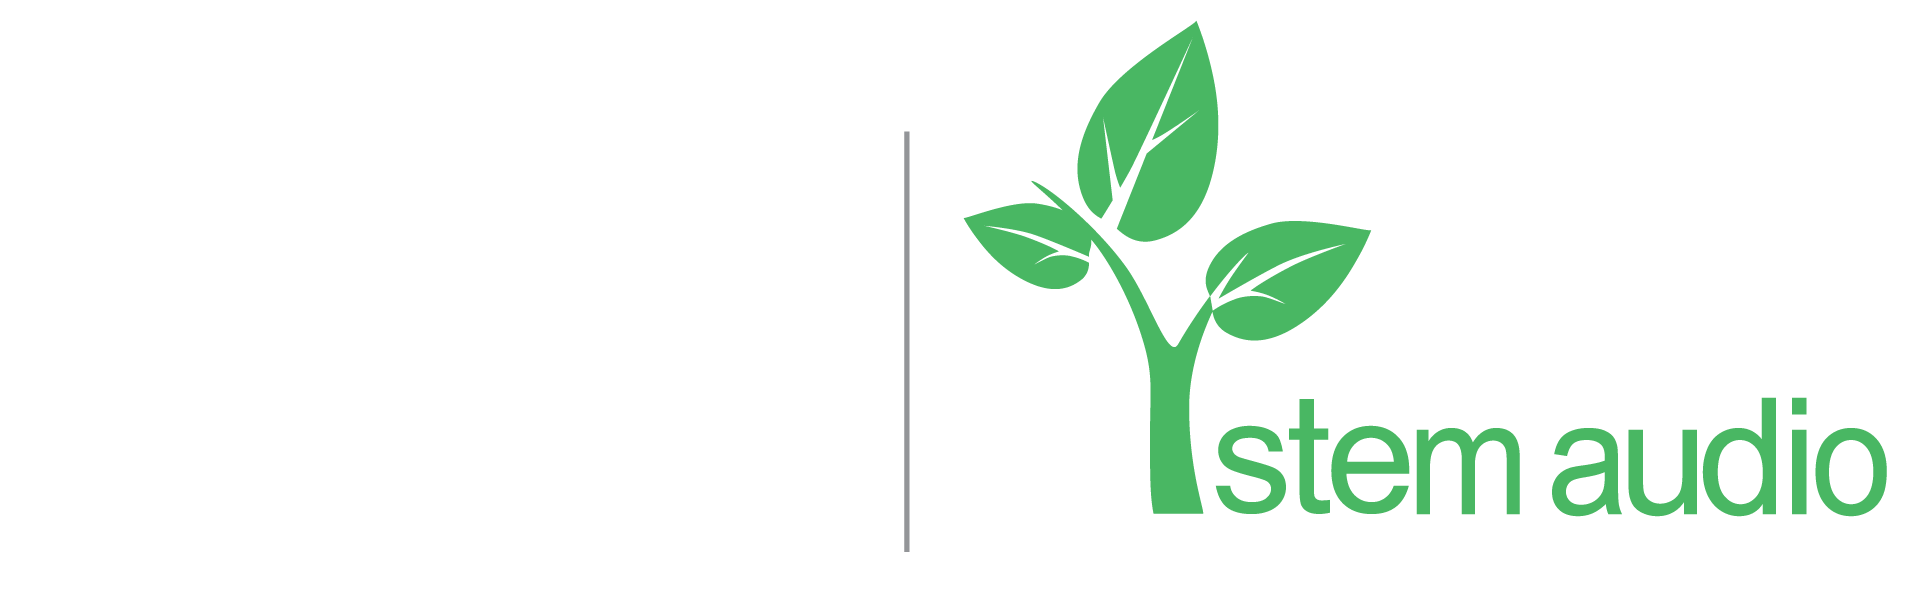 BTX_StemAudio_logos_wht-grn